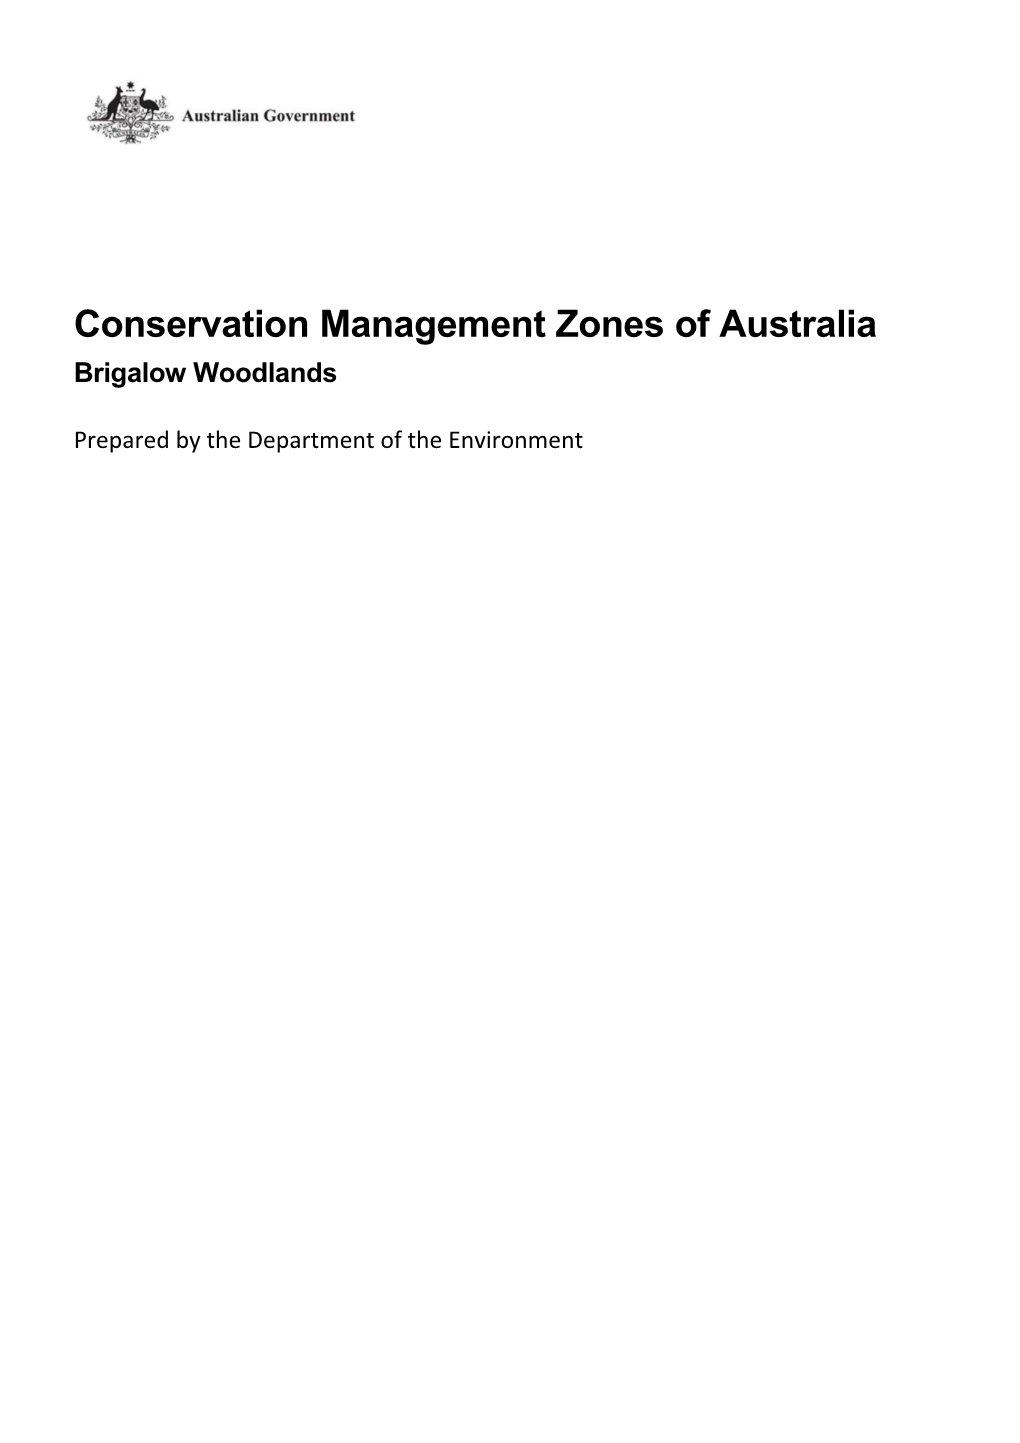 Conservation Management Zones of Australia: Brigalow Woodlands